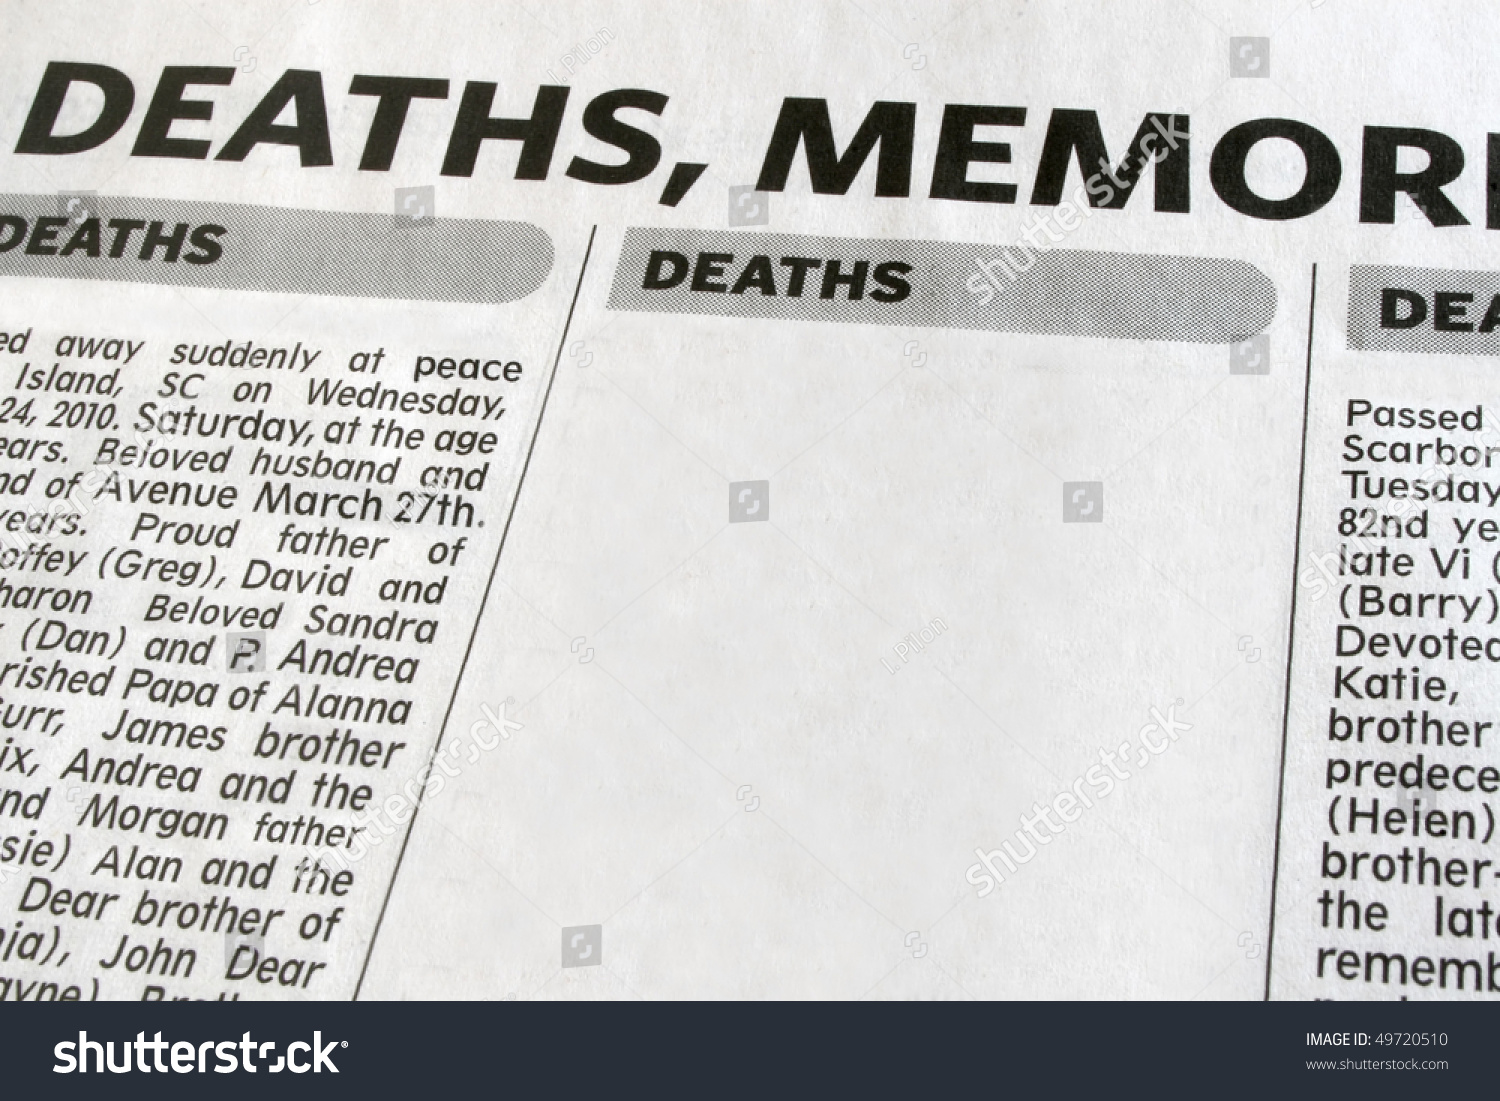 Newspaper advertisement displaying obituaries. #49720510